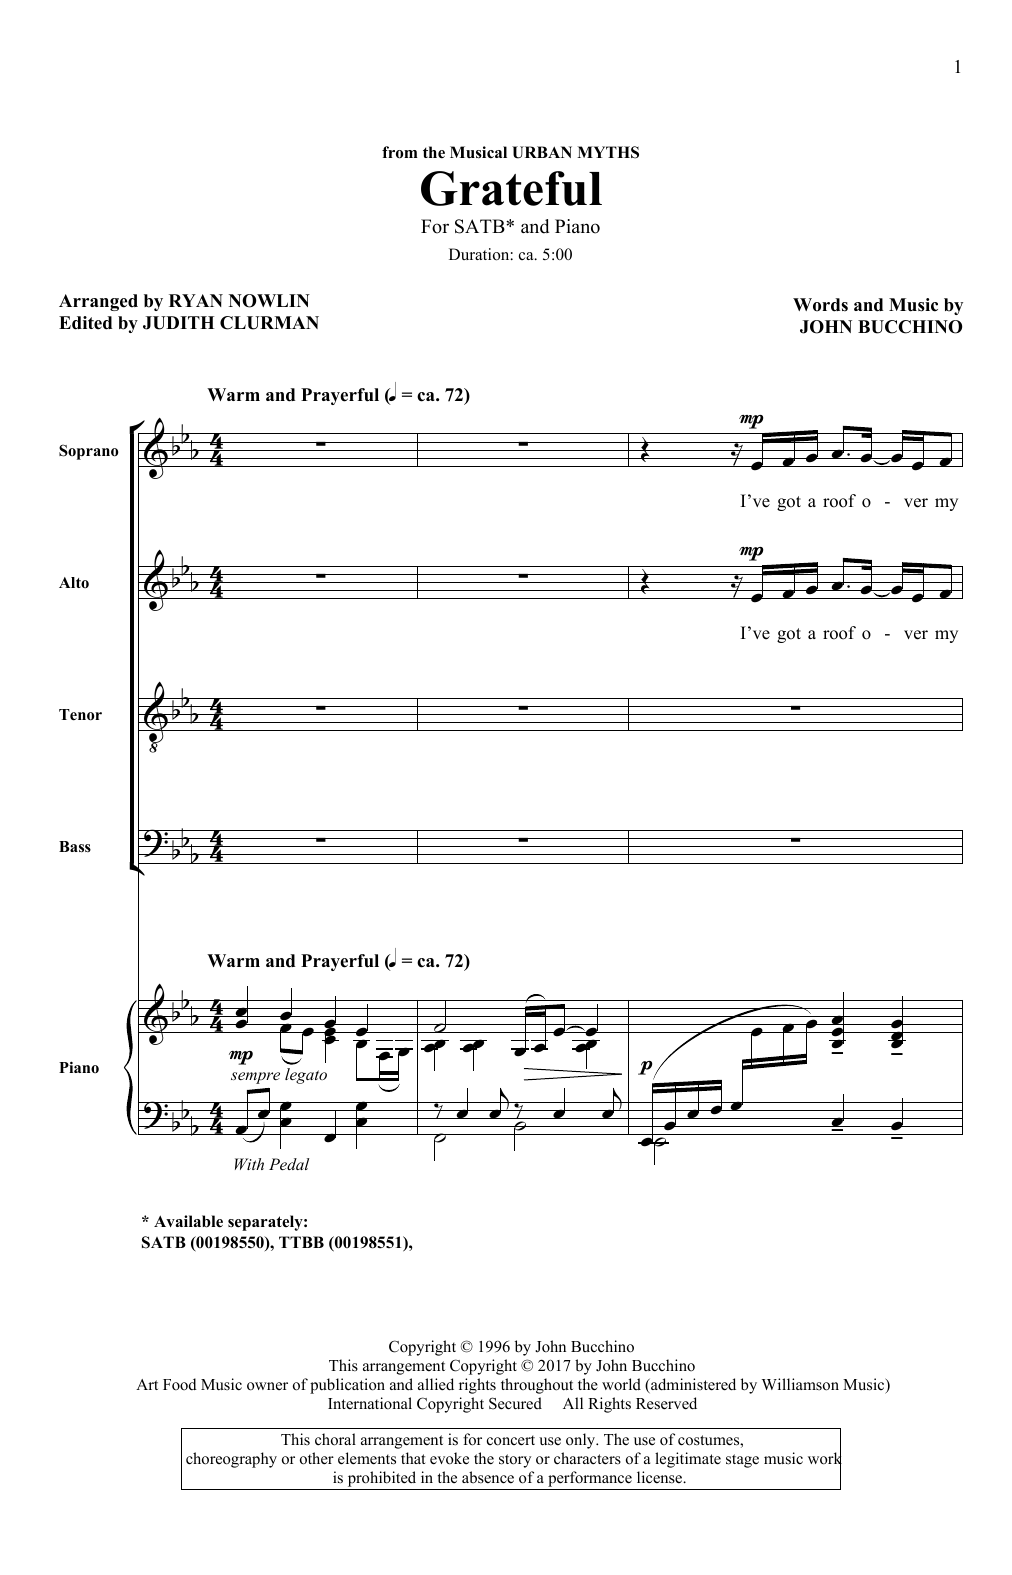 Ryan Nowlin Grateful sheet music notes and chords arranged for SATB Choir